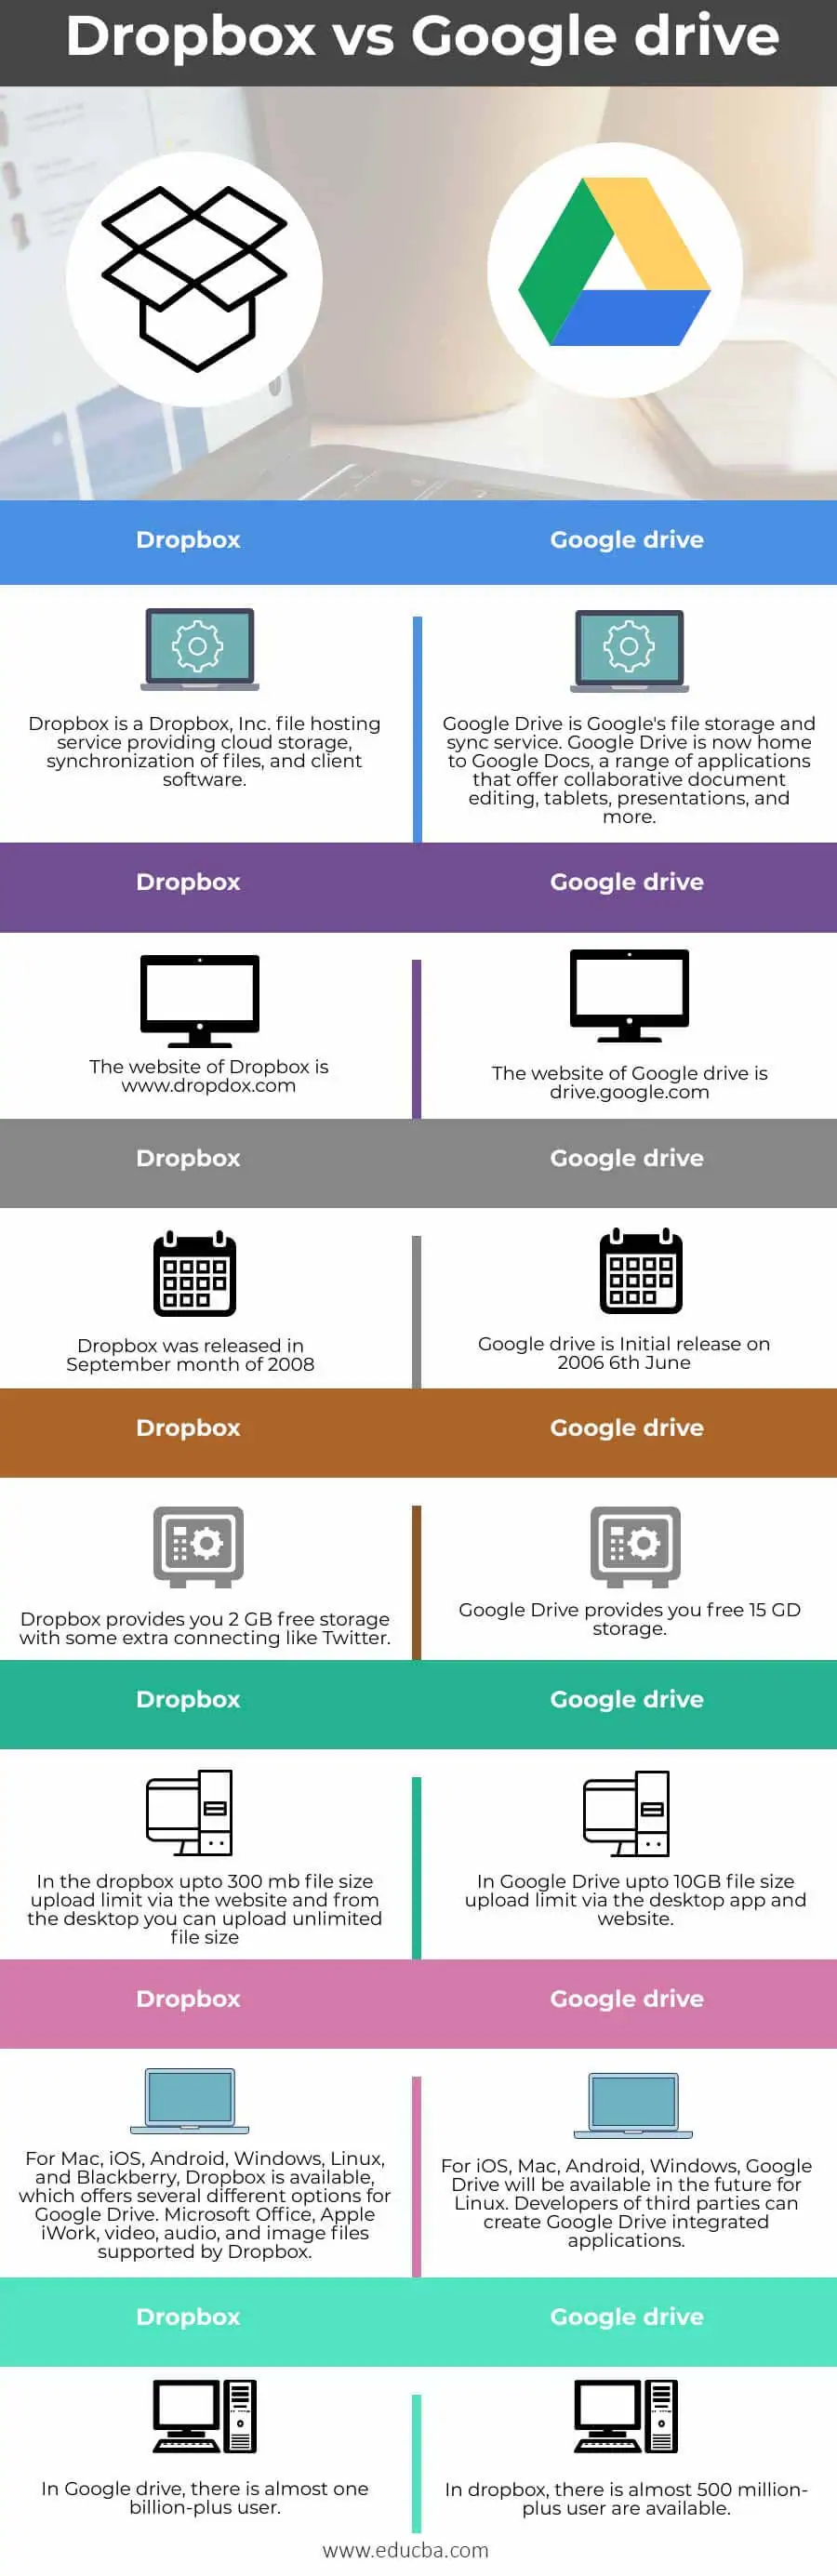 Dropbox-vs-Google-drive-info